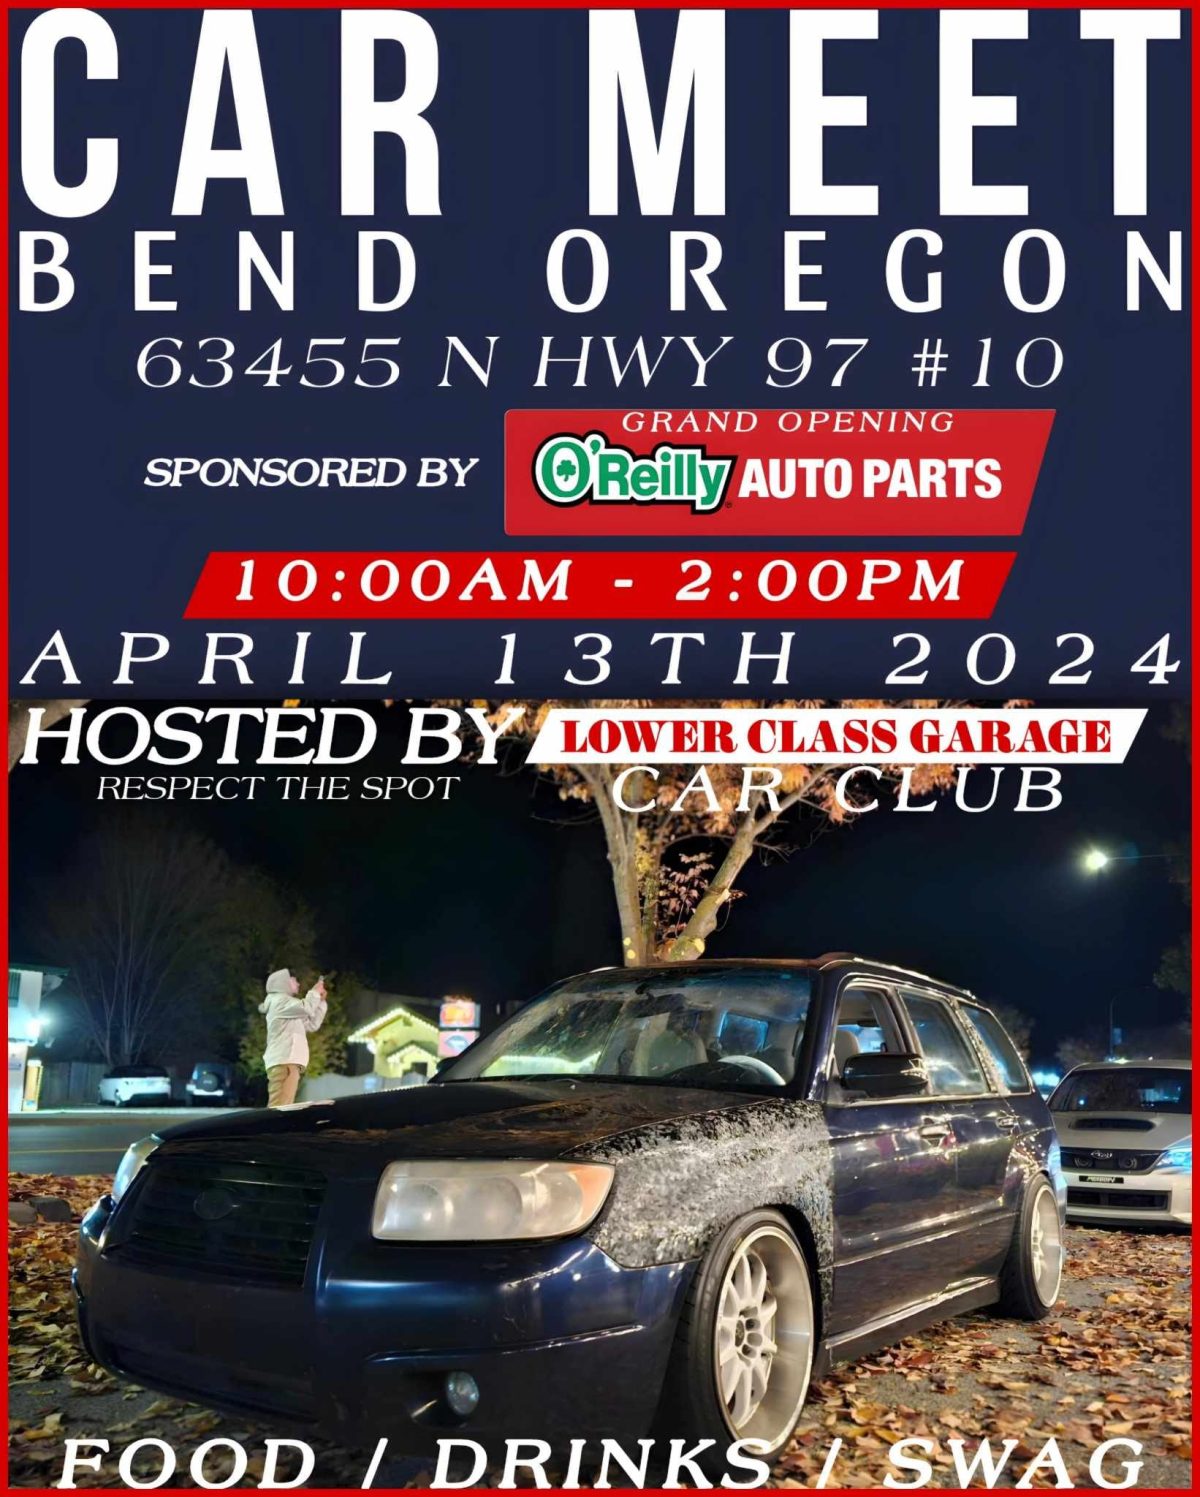 Bend Oregon Car Meet